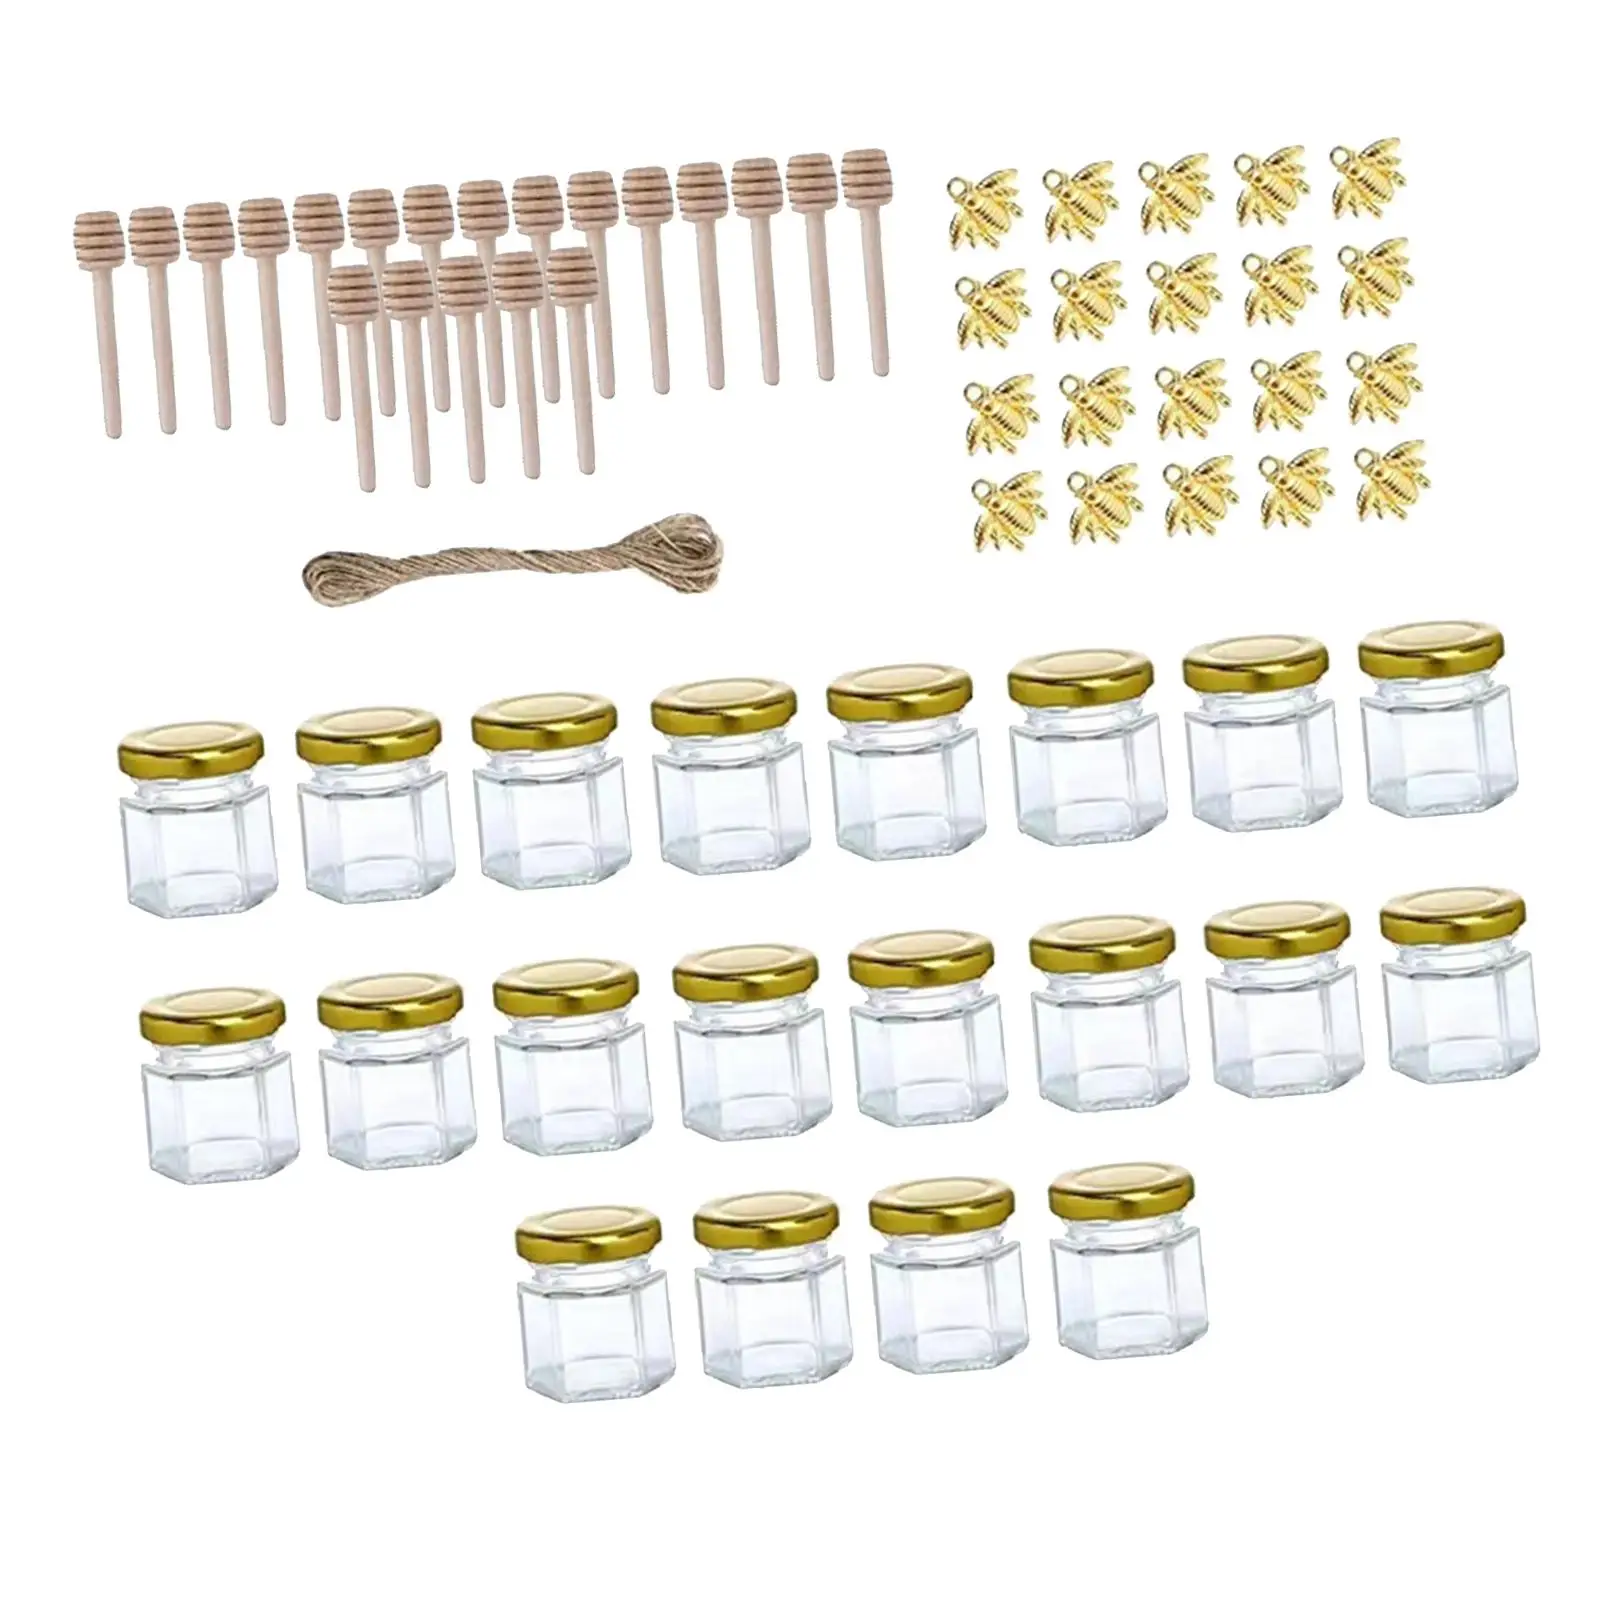 20Pcs Small Glass Jars Honey Jars 45ml for Canning, Storing, and Decorative Purpose Liquids Honey Wedding Candle Making